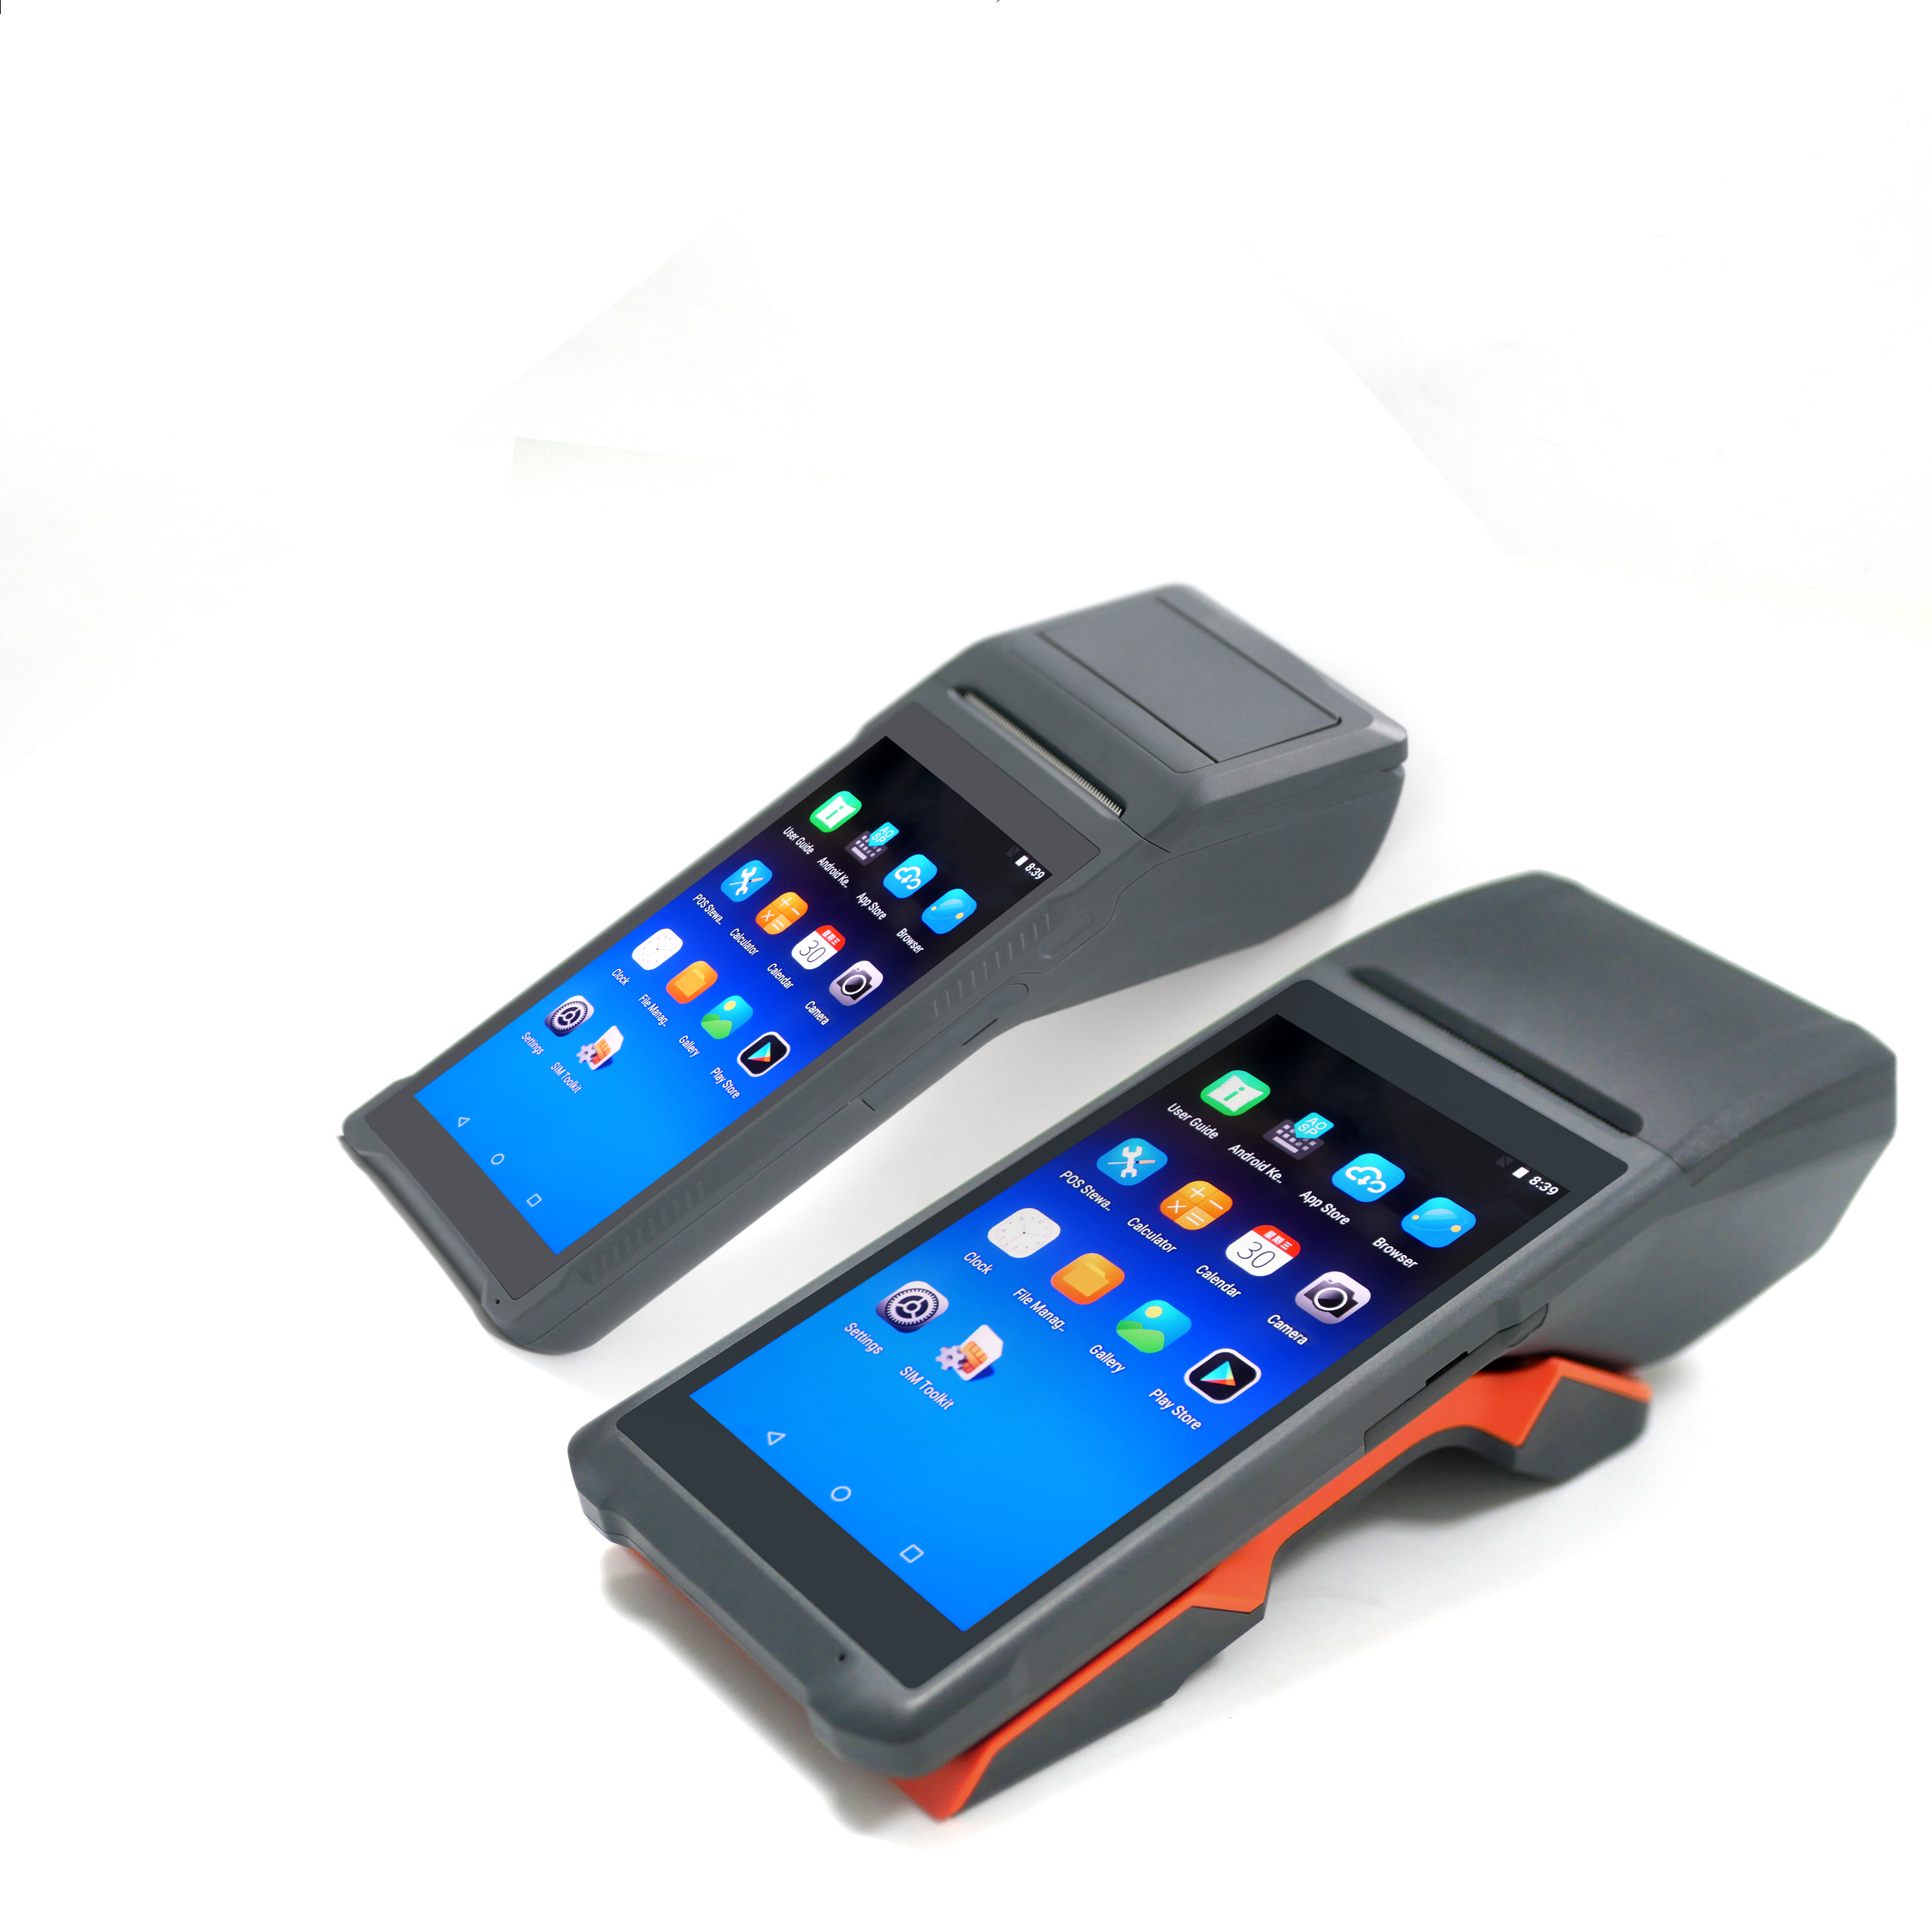 POS-Q7 5,5 ιντσών 3G εκτός σύνδεσης για φορητές συσκευές Ασύρματα δεδομένα χειρός Android POS Συστήματα προς πώληση